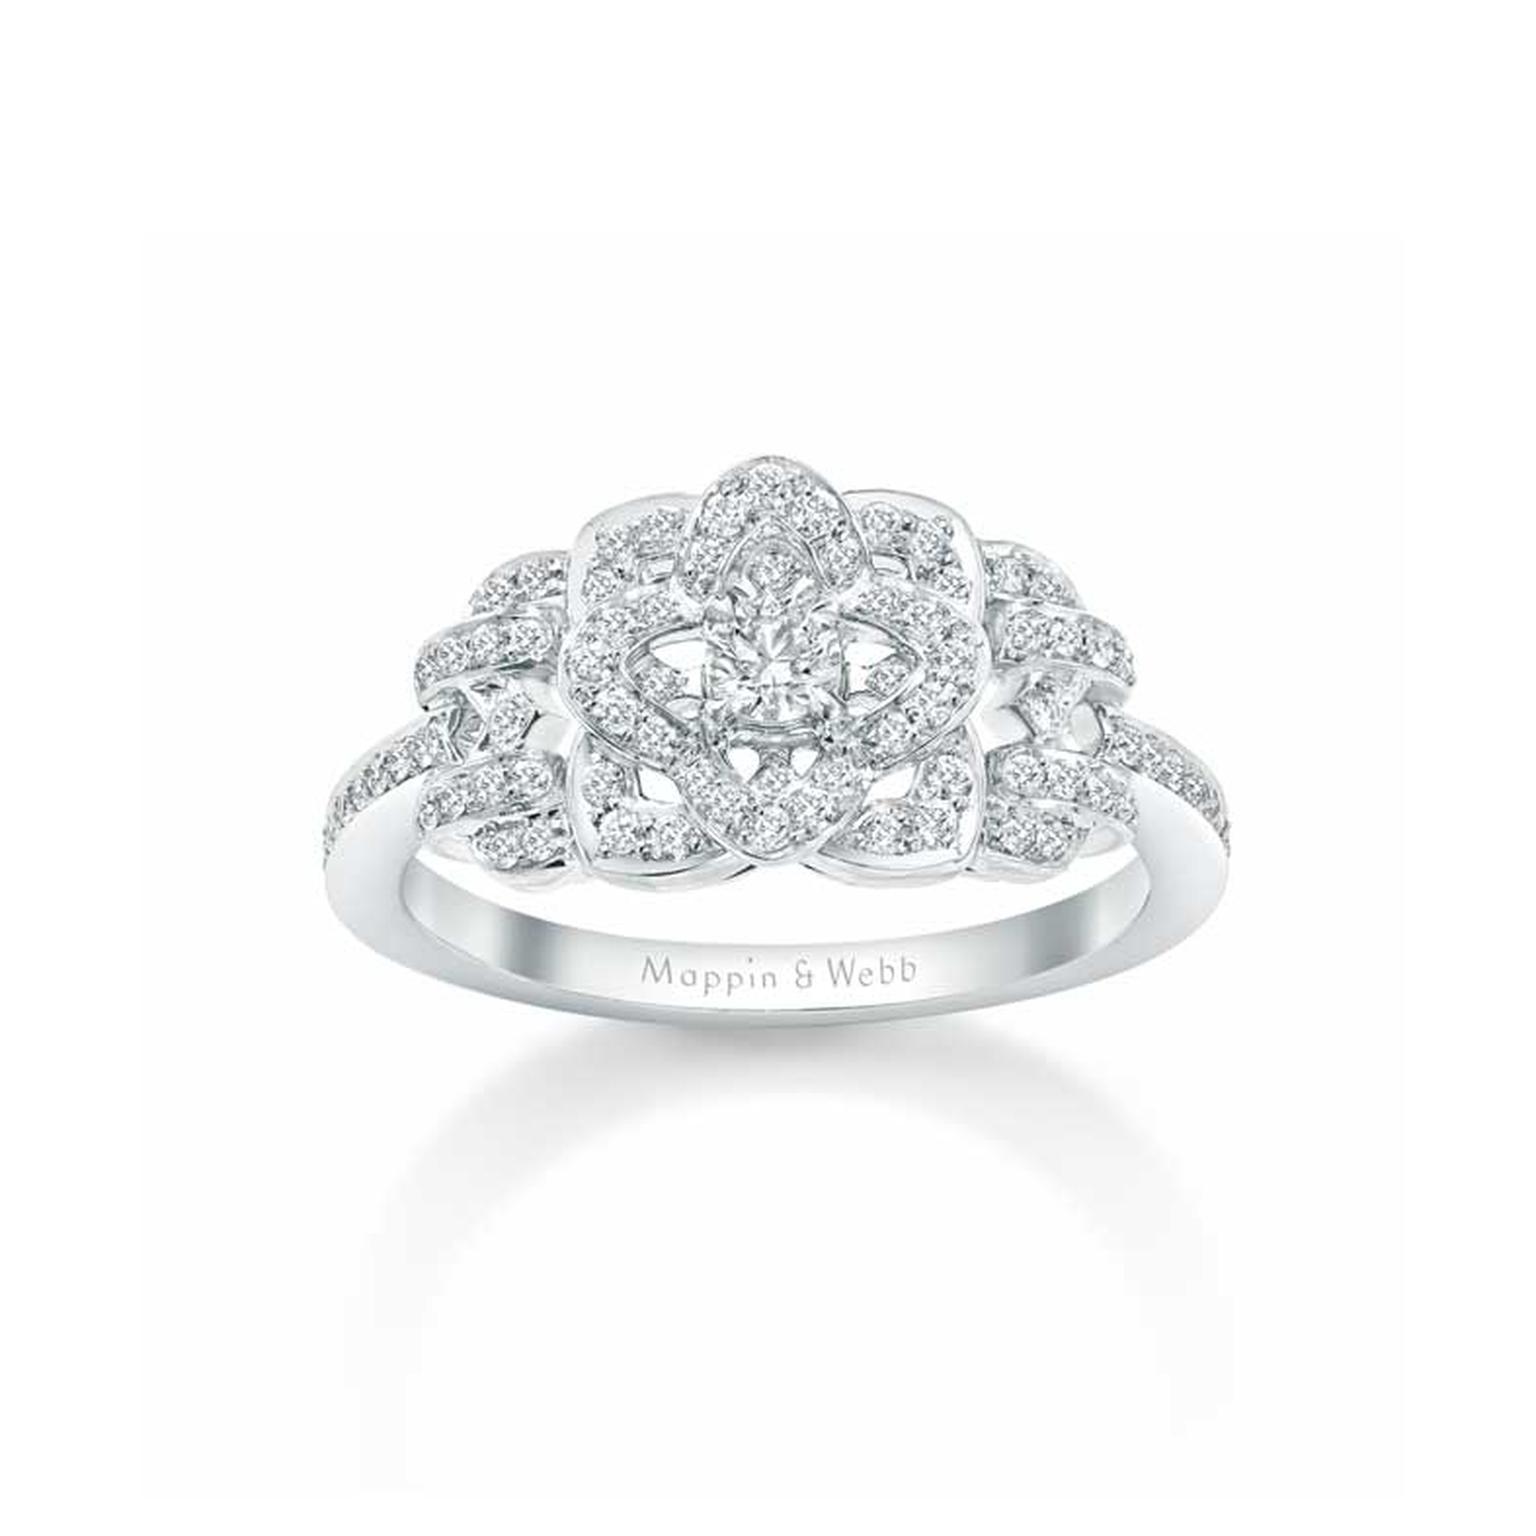 Mappin & Webb Floresco diamond engagement ring